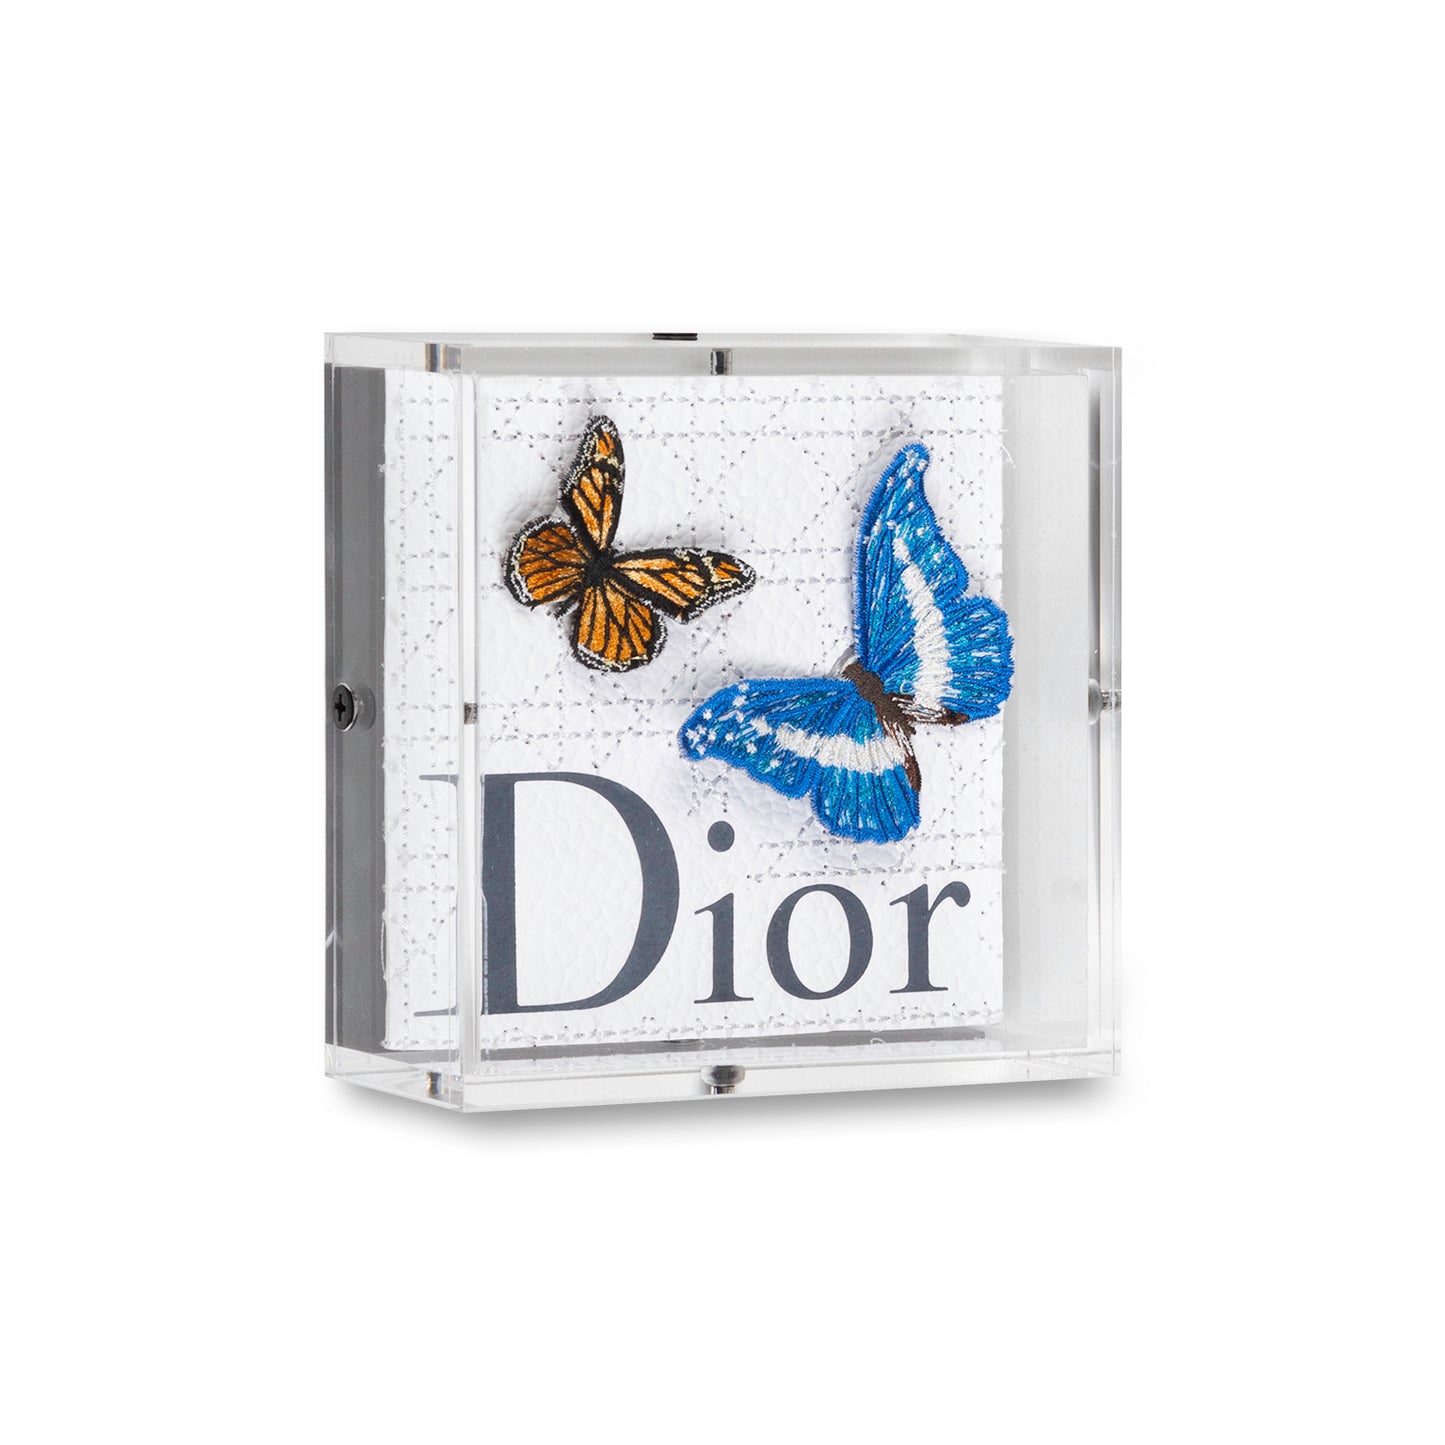 Petite Dior Butterfly Swarm by Stephen Wilson (5x5x2")